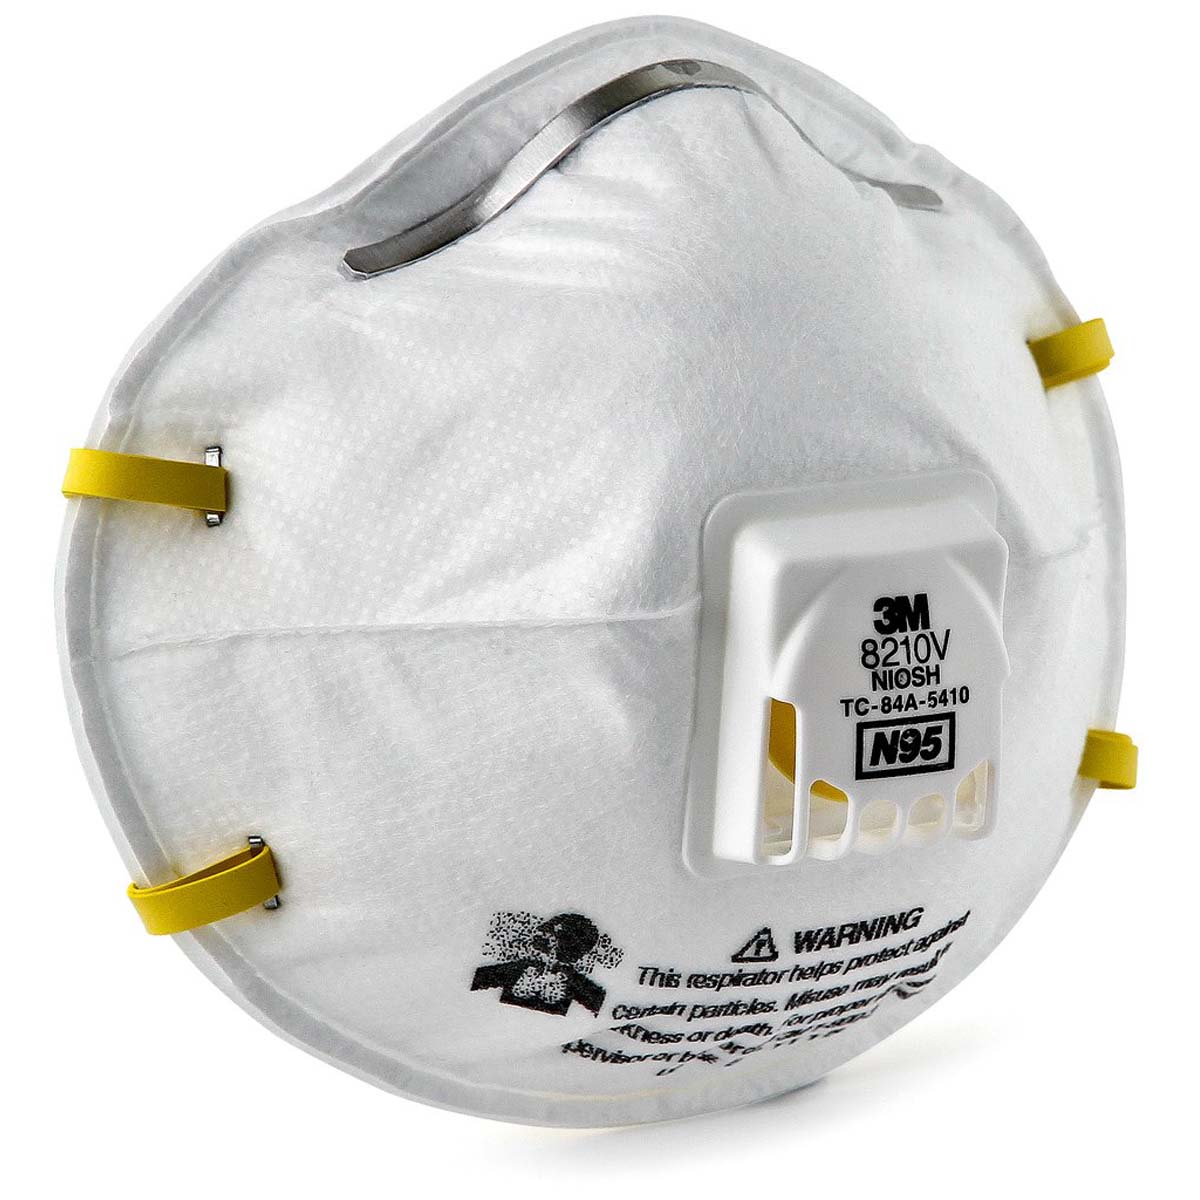 Particulate Respirator Face Mask 8210V, N95, Cool Flow Valve, 10 per box